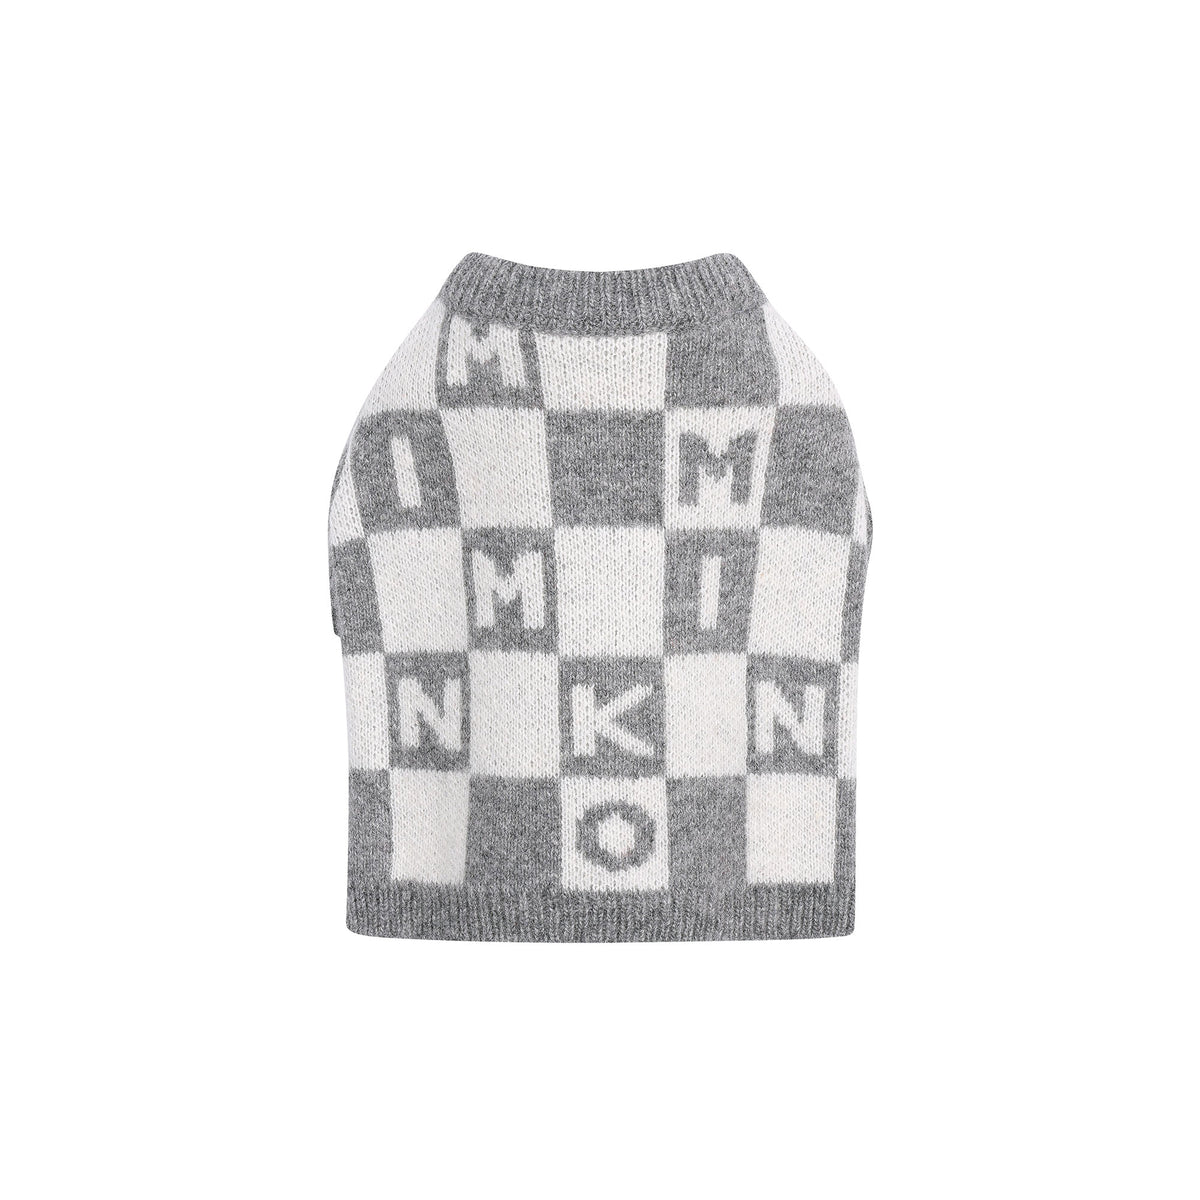 Miminko Checkered Sweater - Light Grey